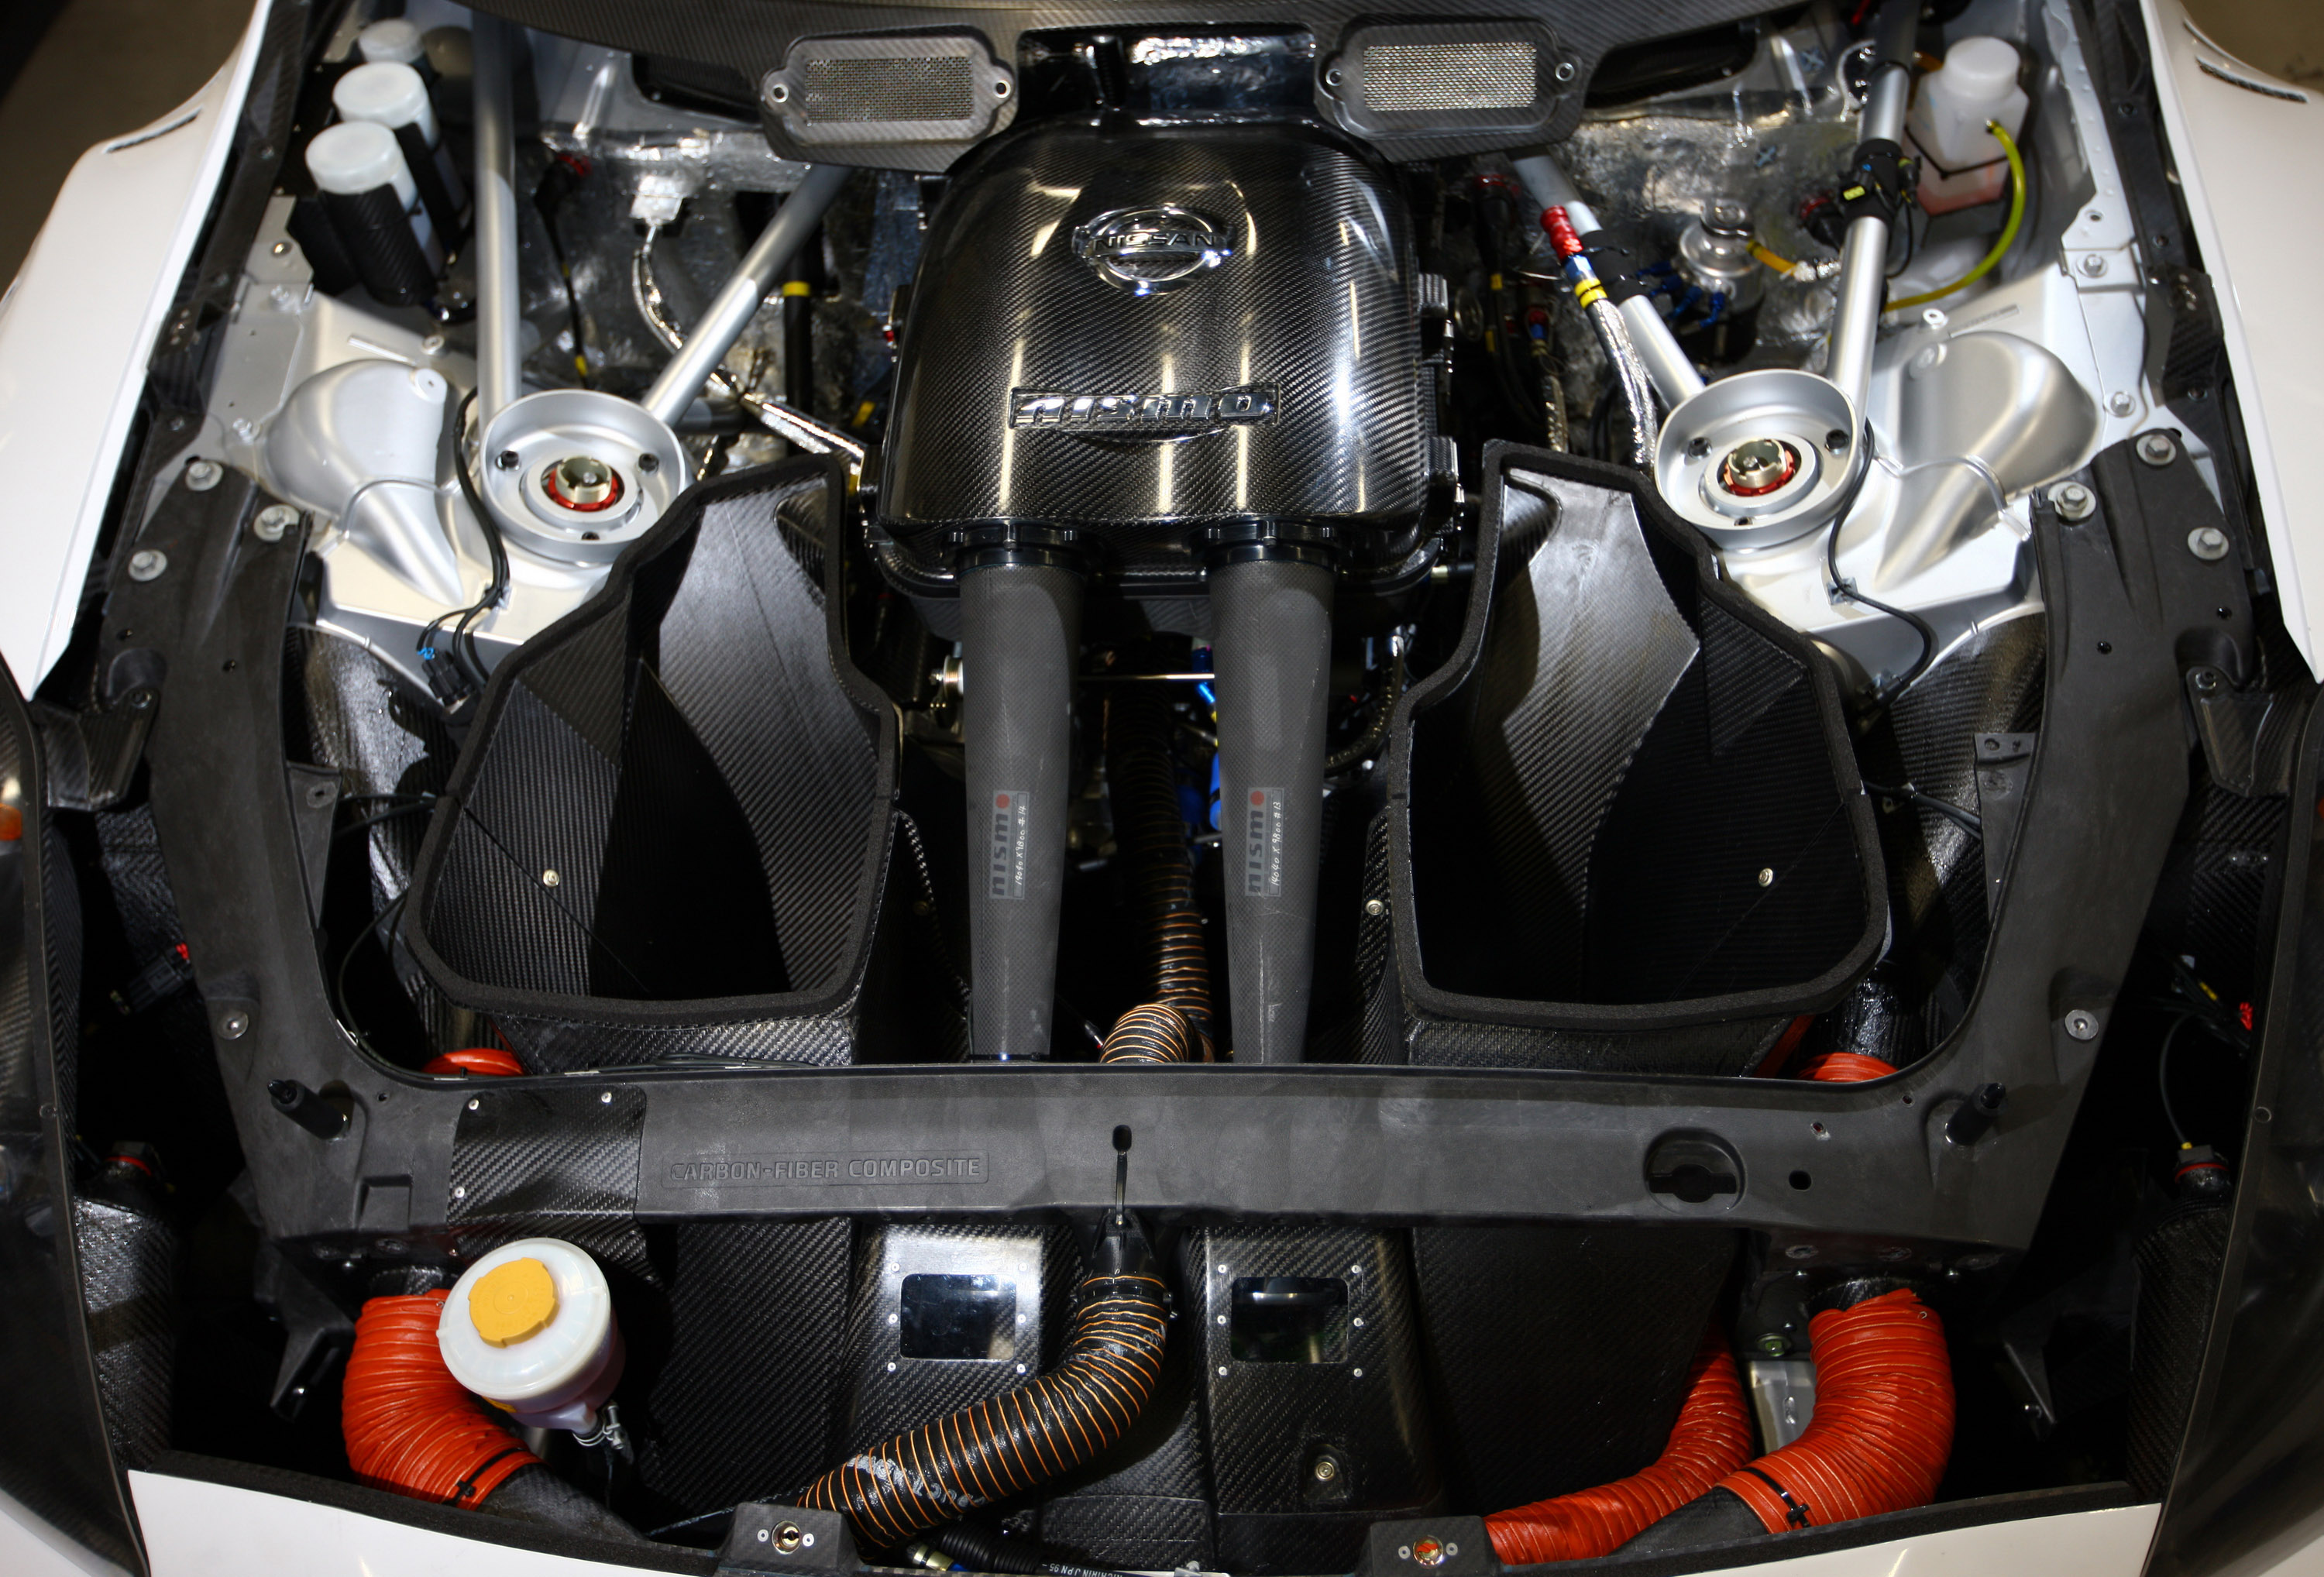 Nissan GT-R  FIA GT1